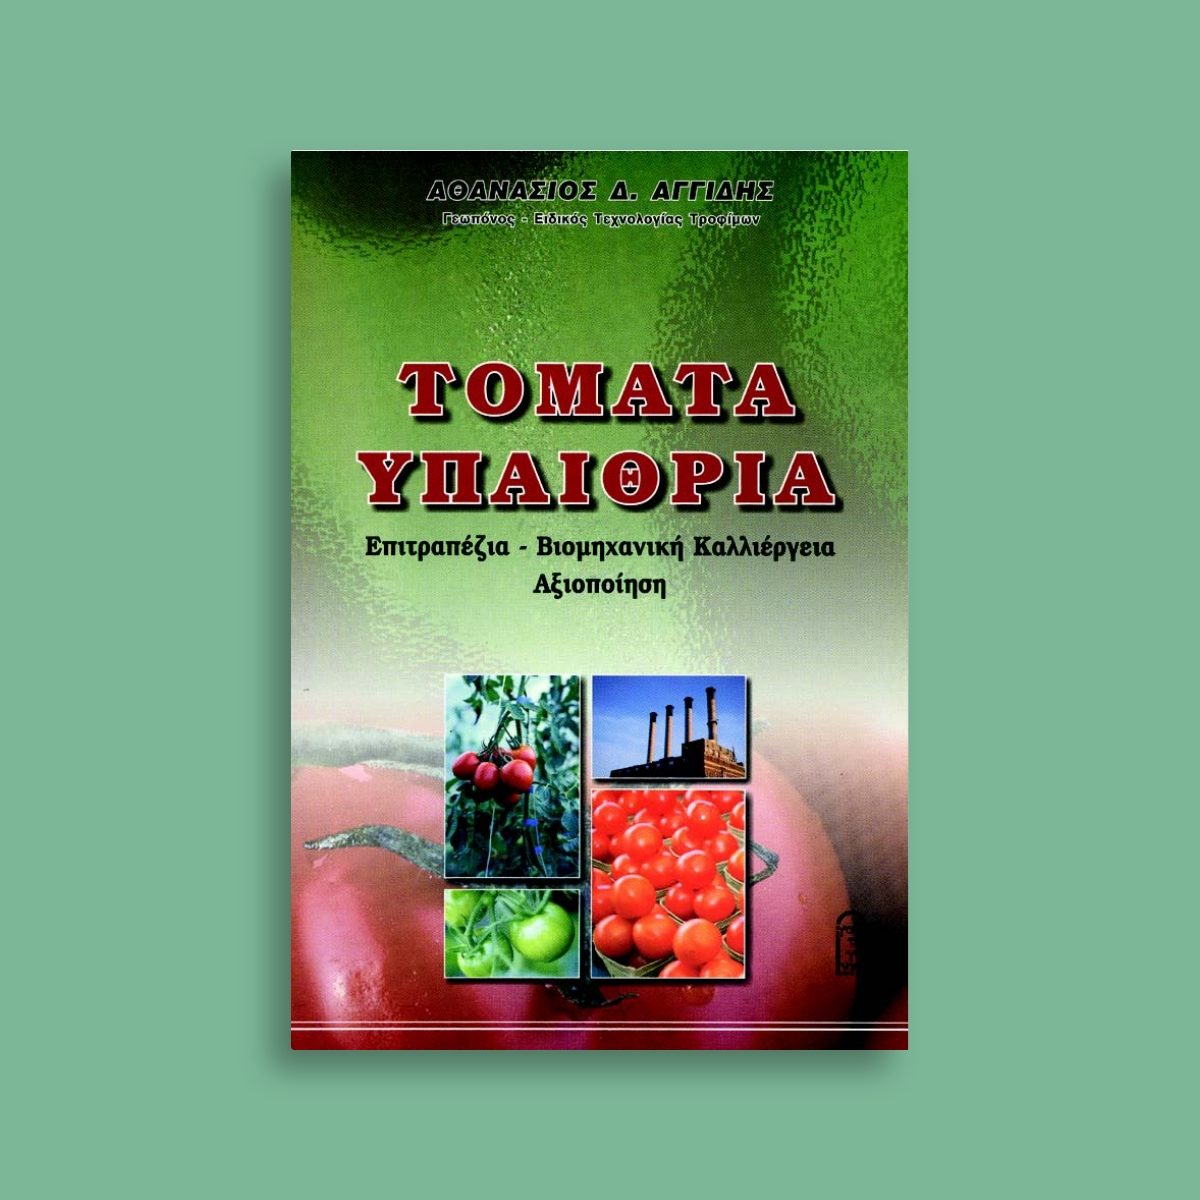 Tomata ipaithria